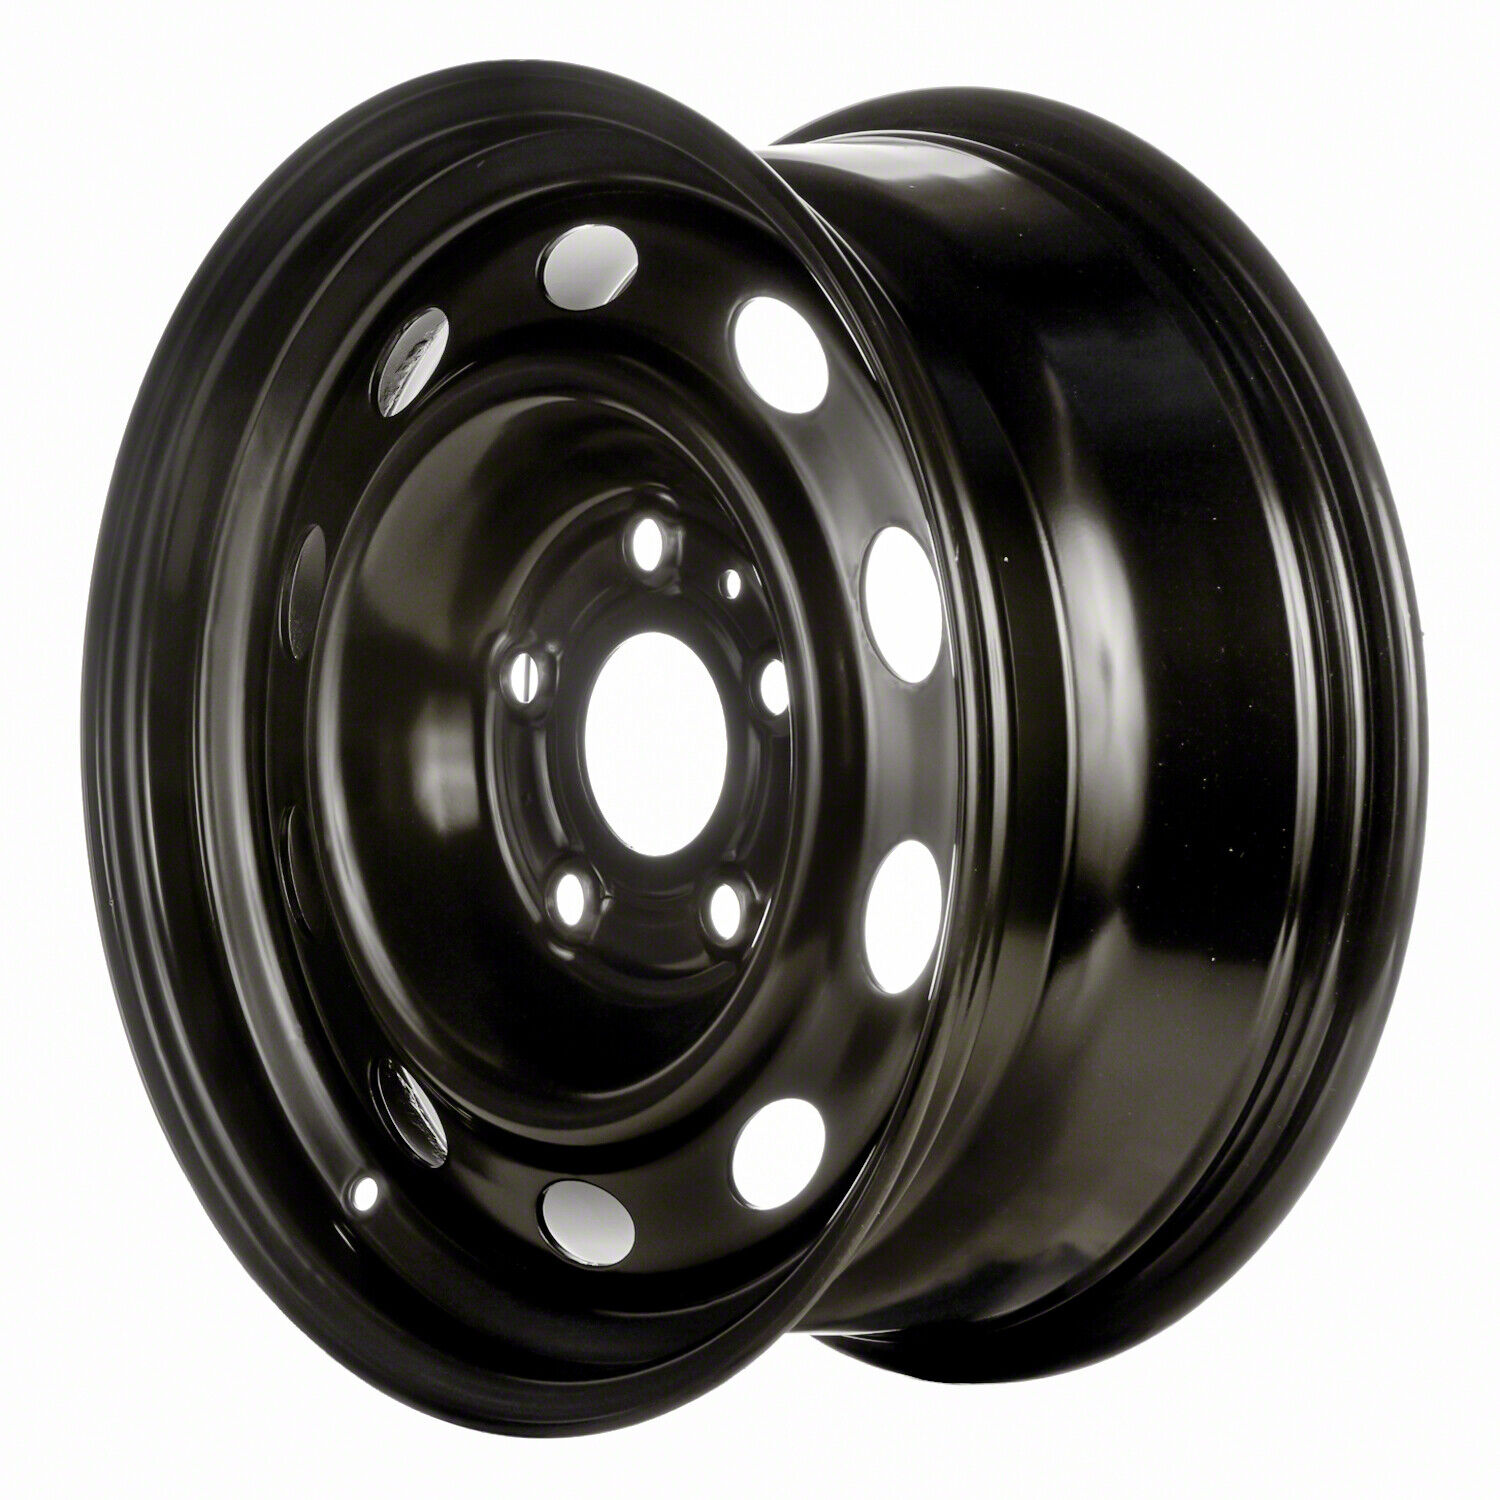 02314 Reconditioned OEM 17x7.5 Black Steel Wheel fits 2007-2009 Chrysler Aspen